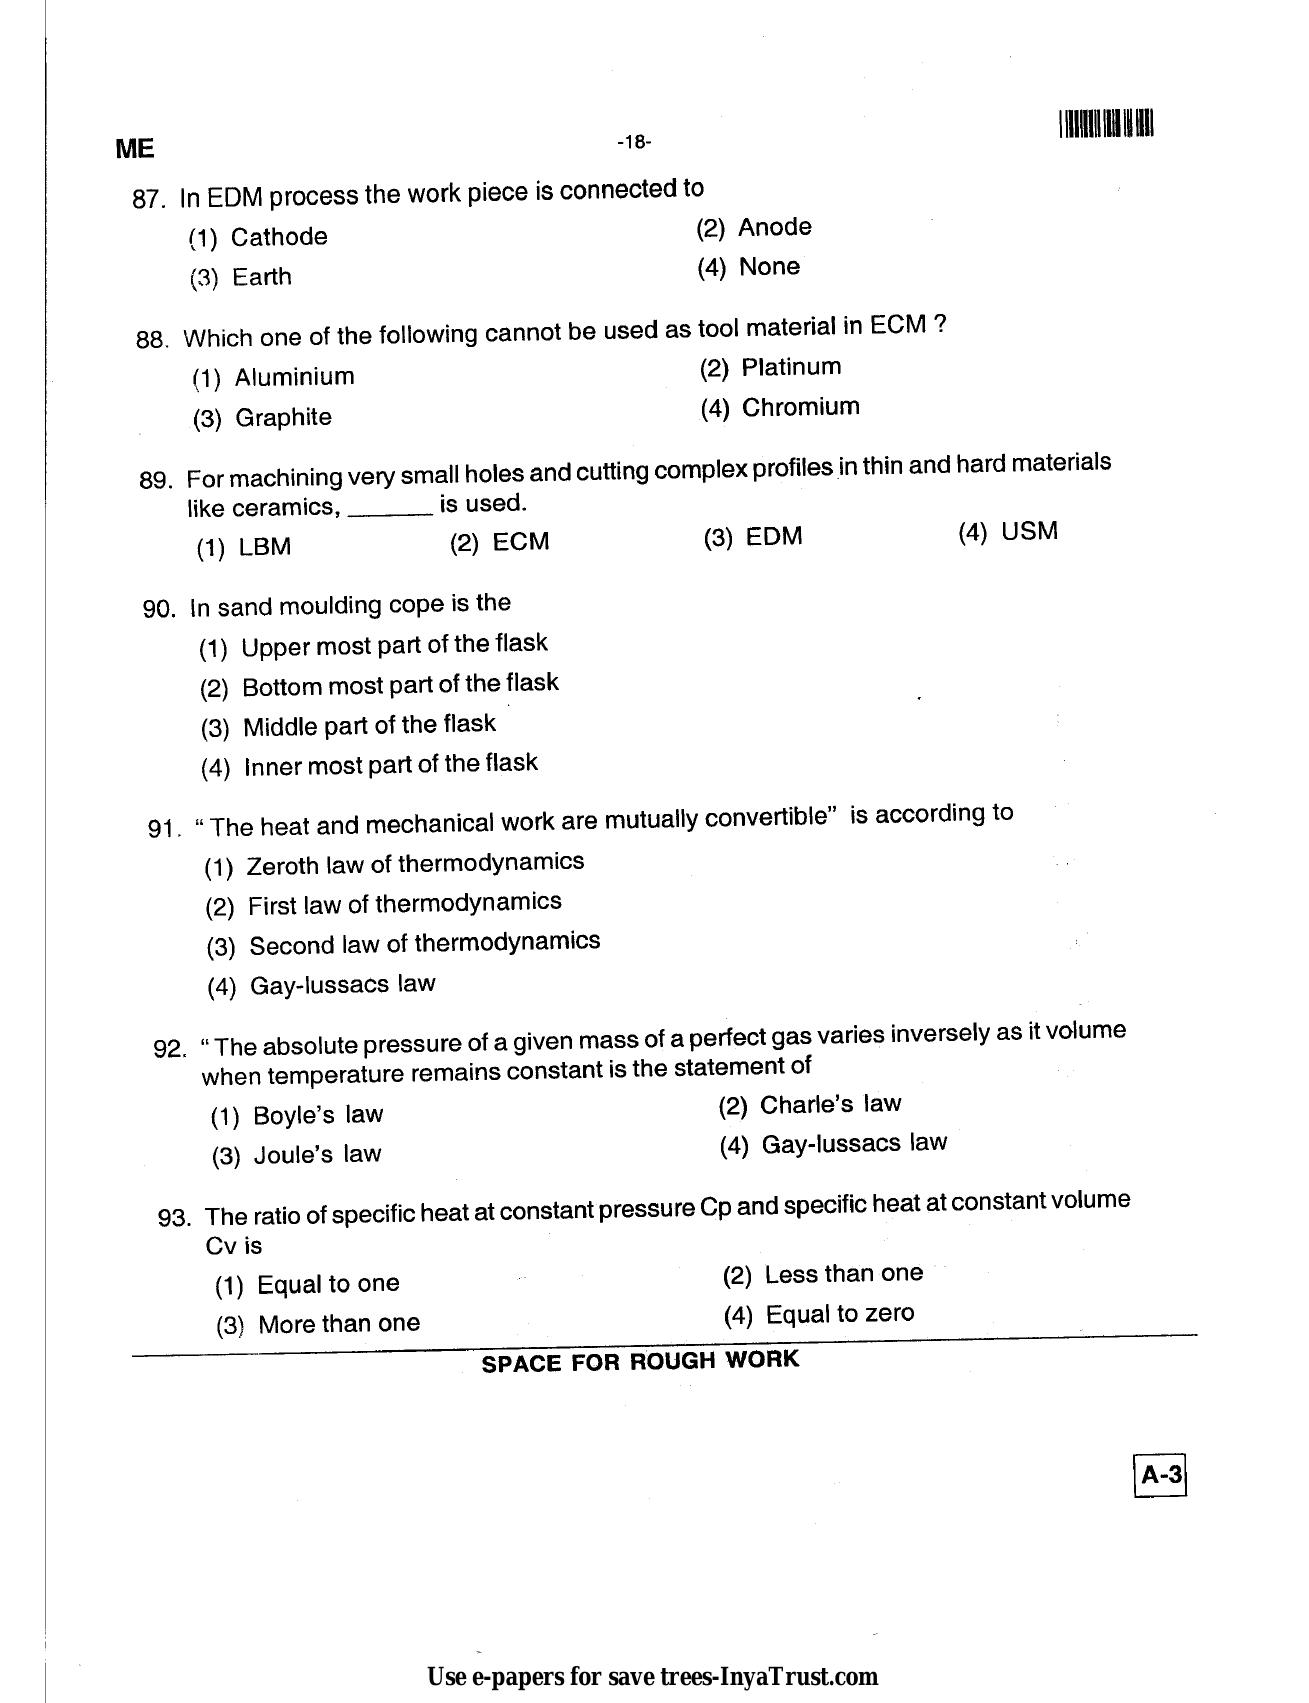 Karnataka Diploma CET- 2013 Mechanical Engineering Question Paper - Page 16